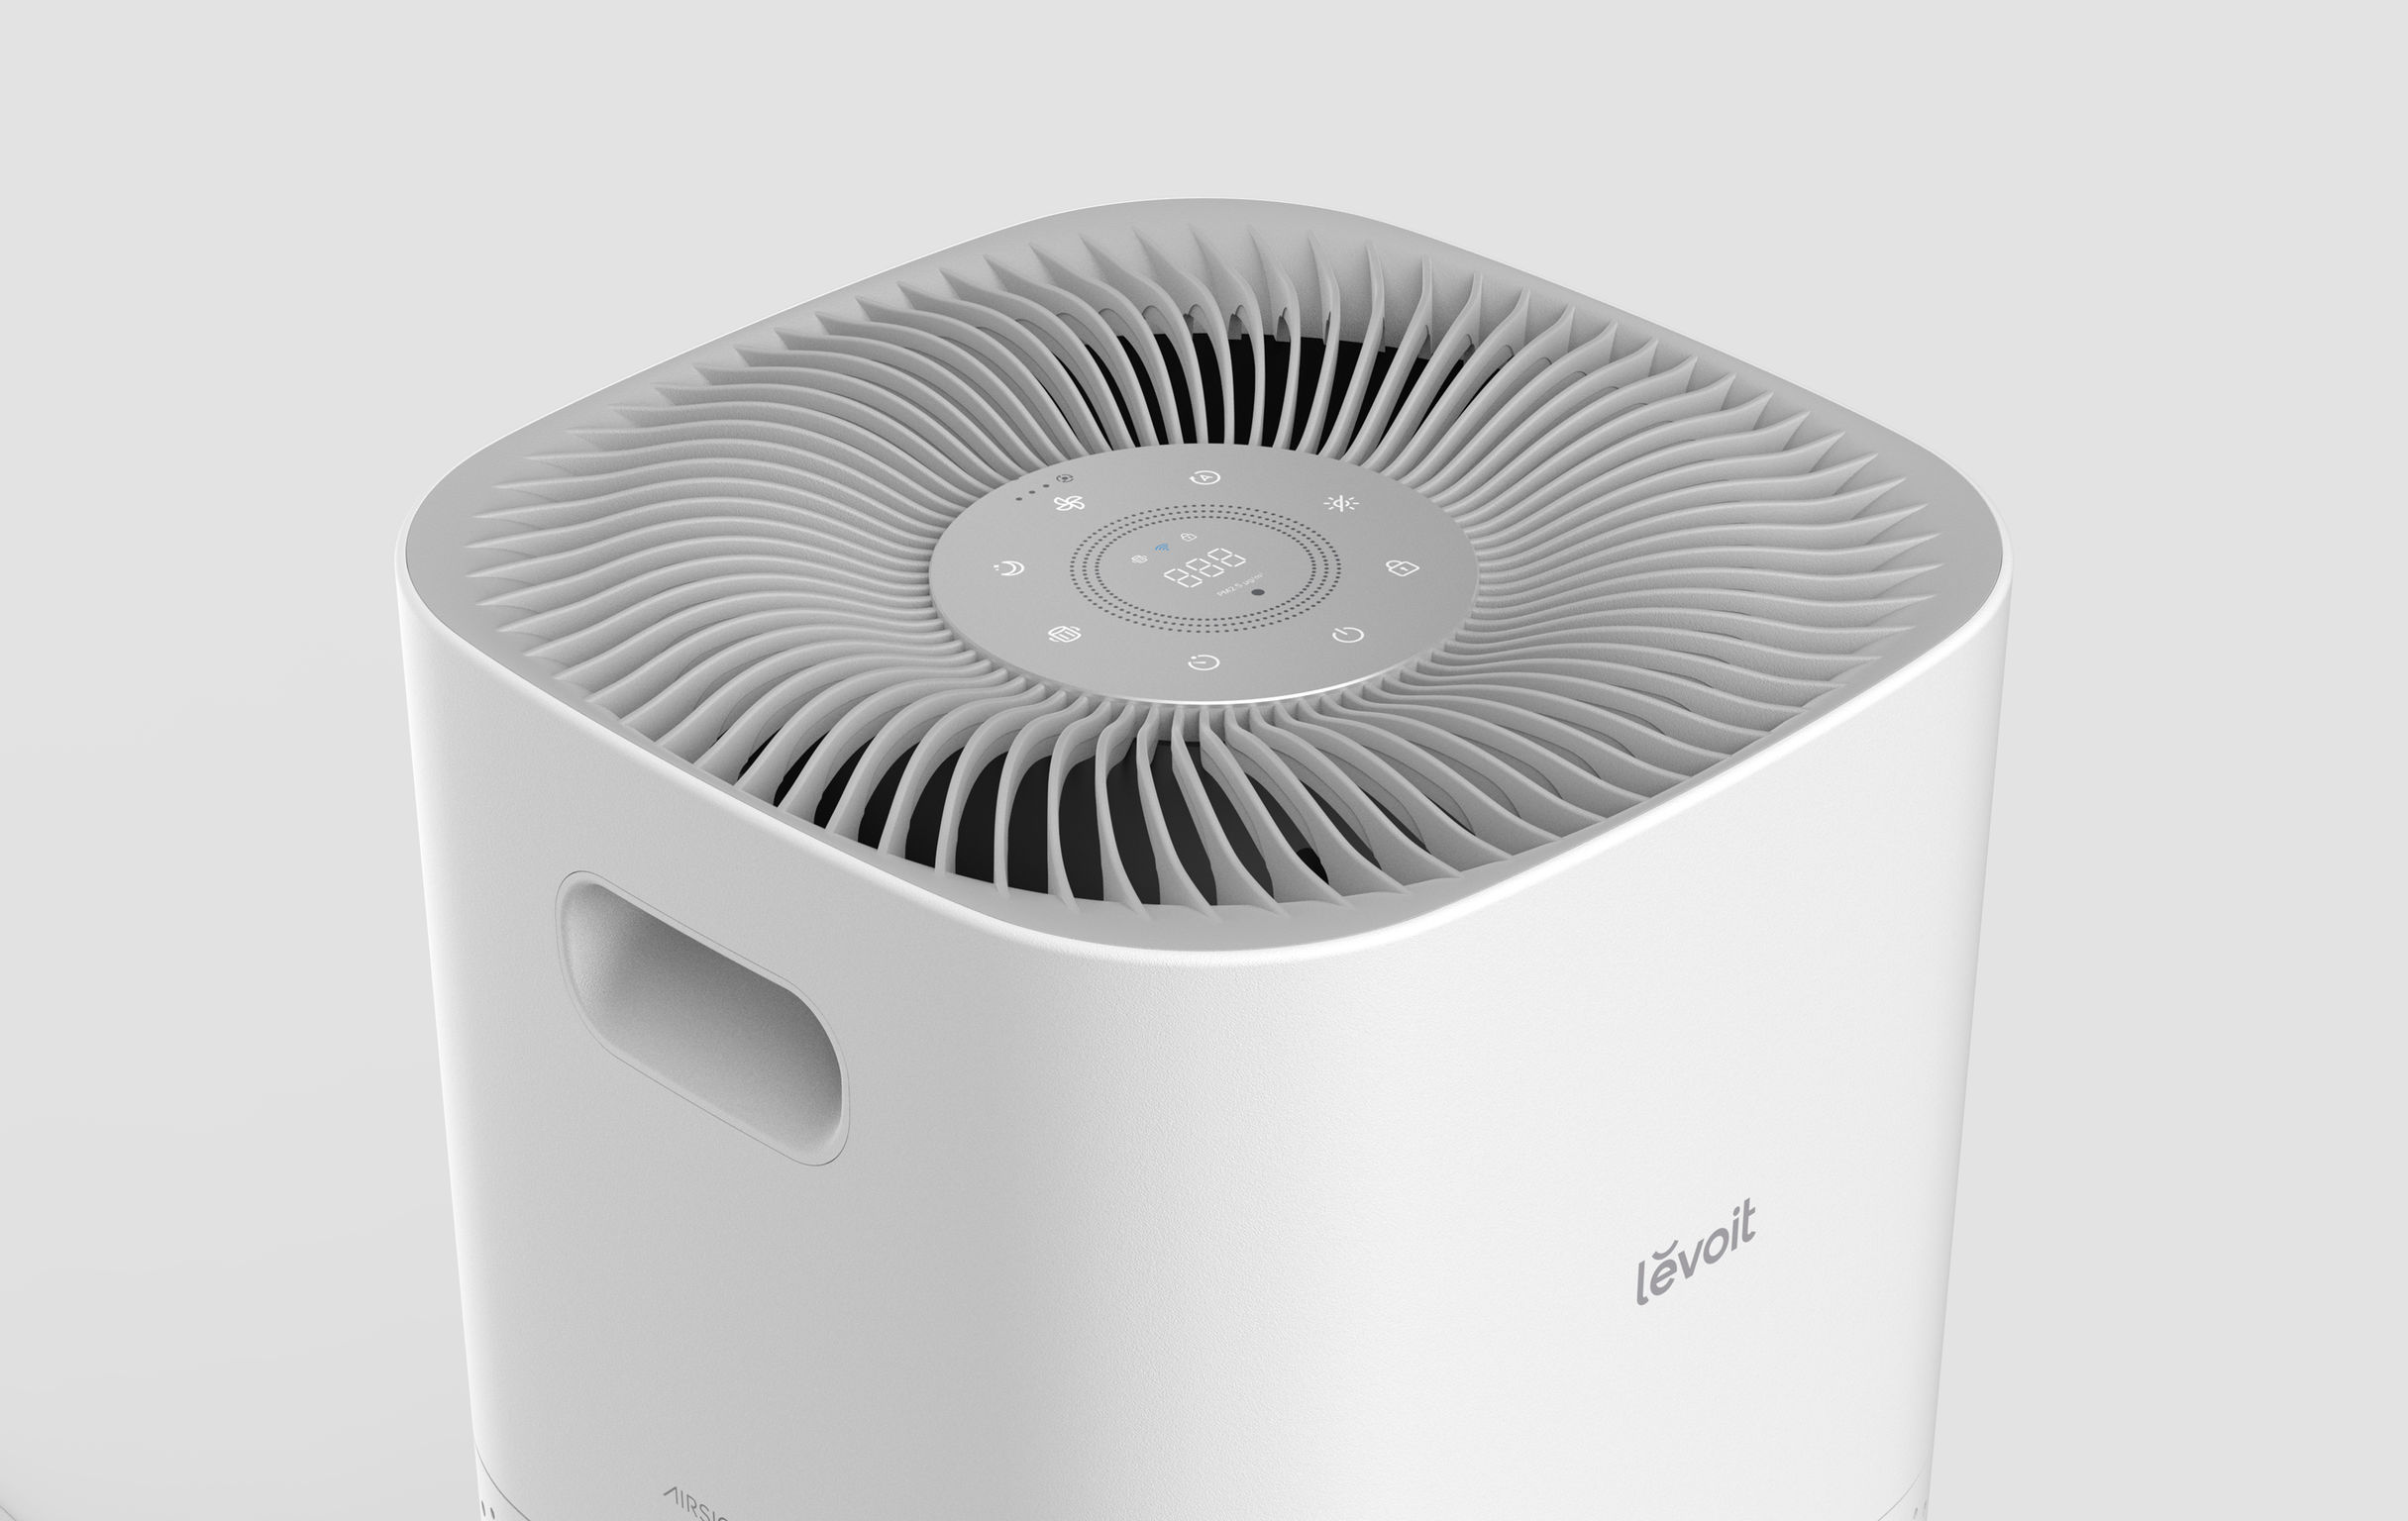 Levoit Smart True Hepa Air Purifier With Bonus Filter : Target